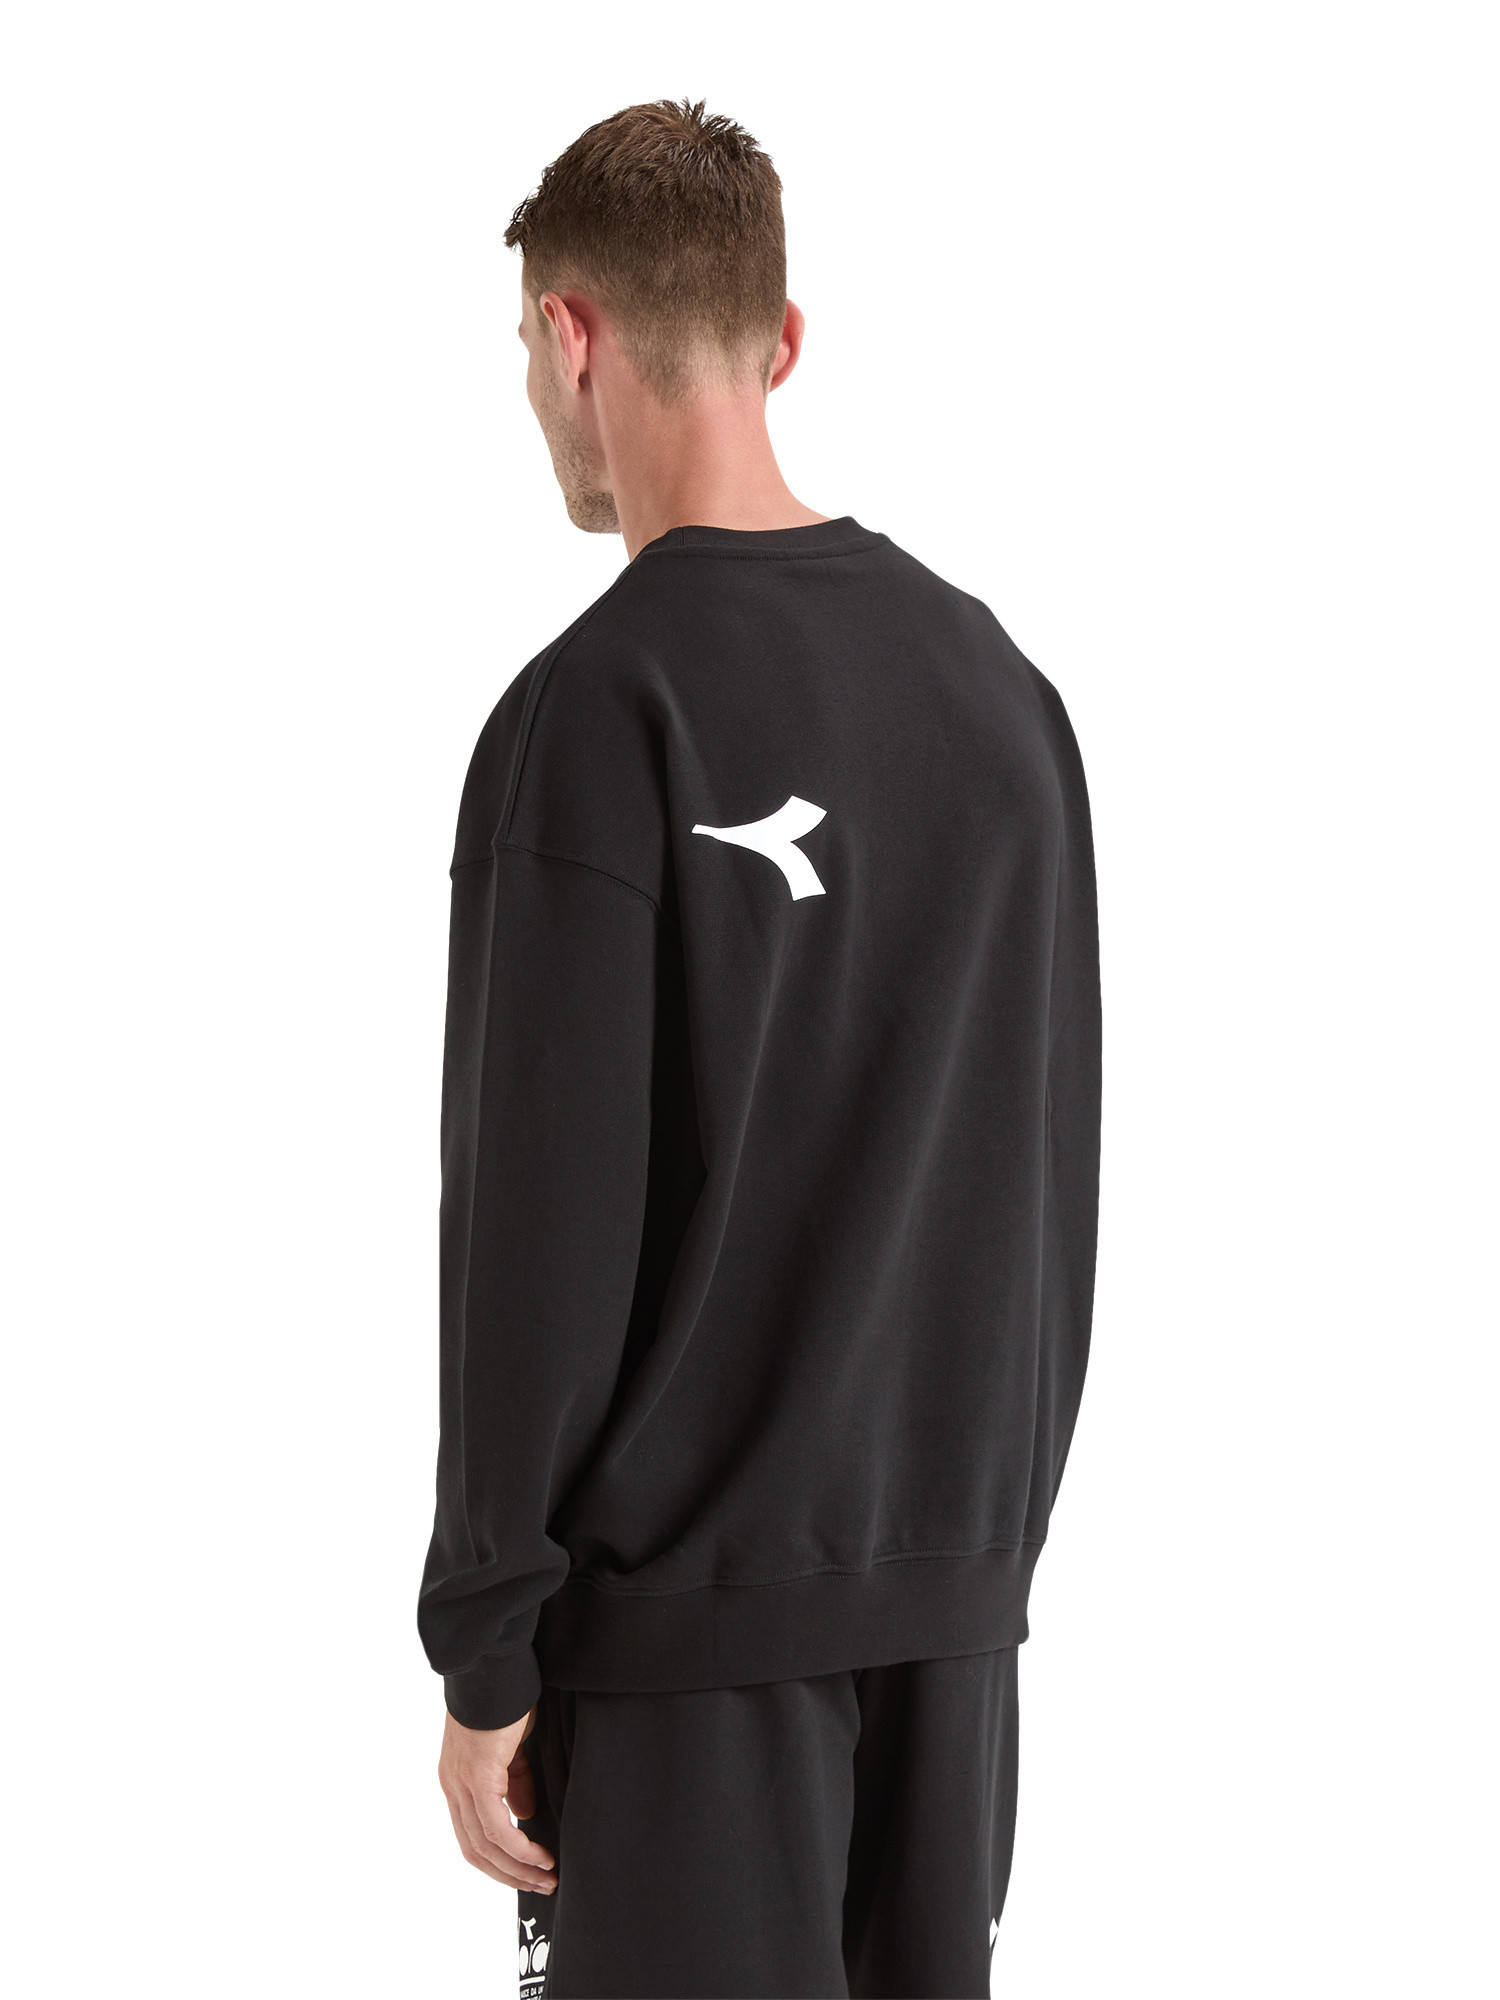 Diadora - Cotton poster crewneck sweatshirt, Black, large image number 3